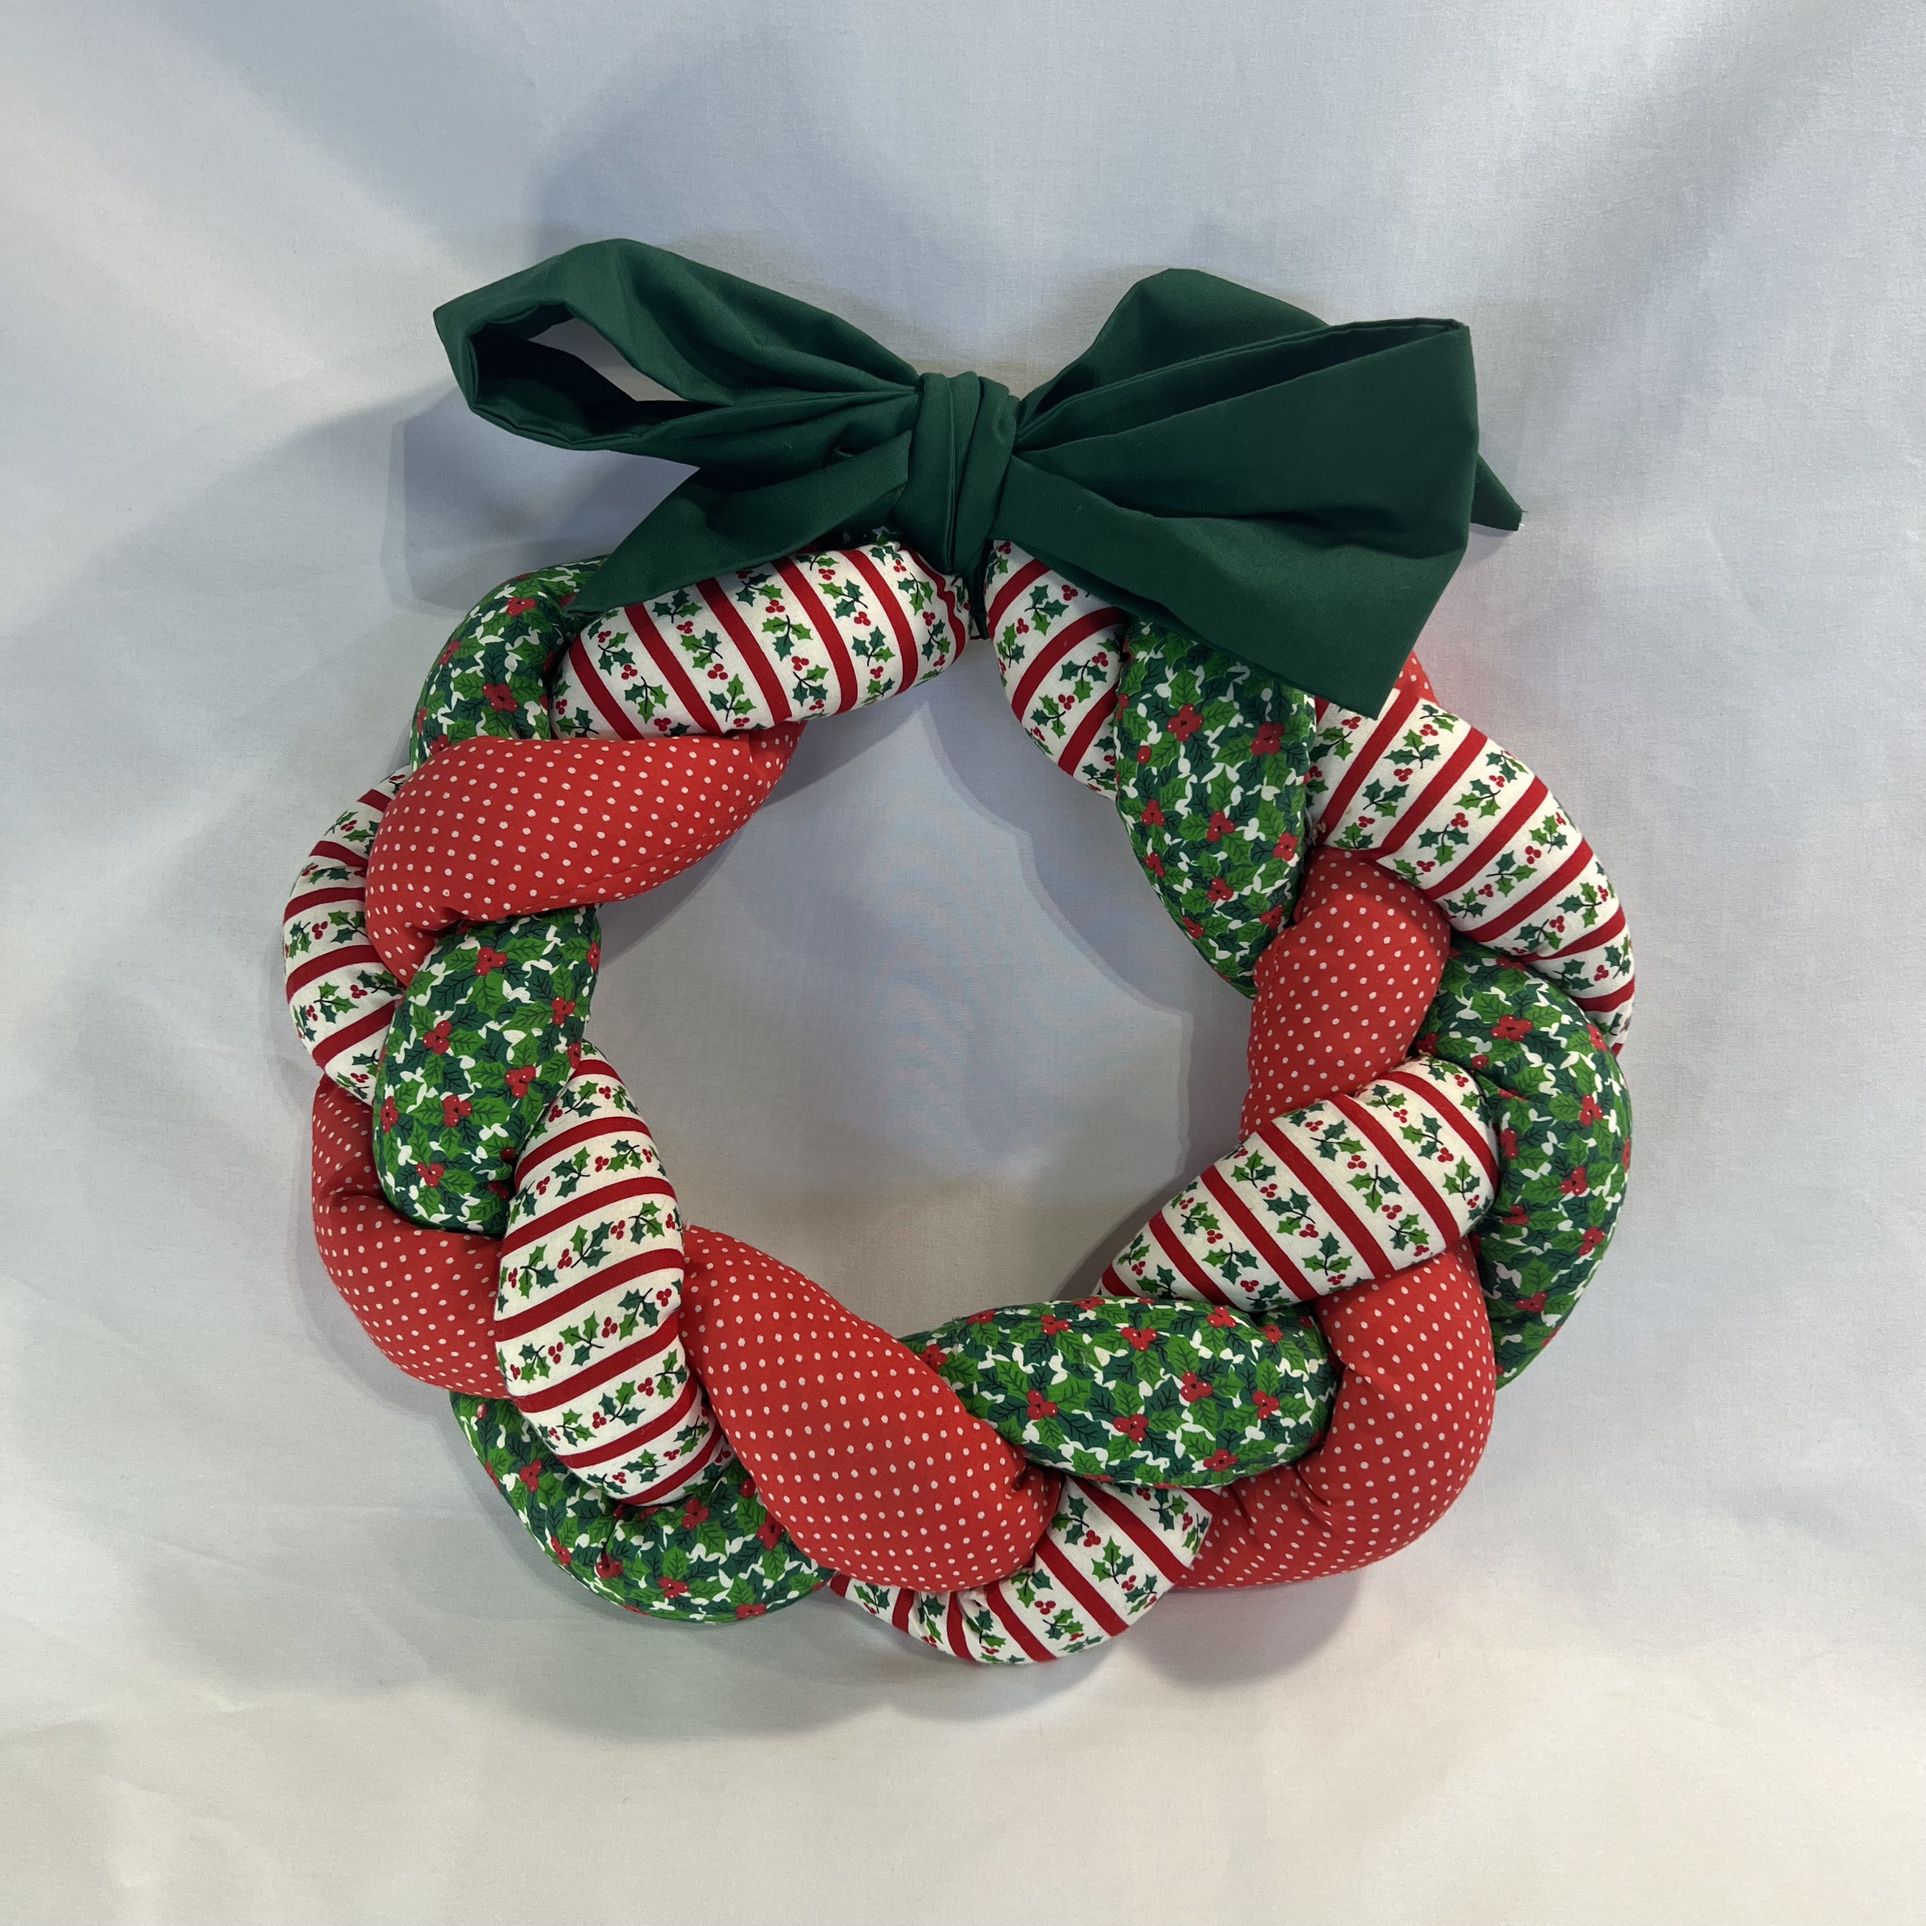 12” Vintage Braided Fabric Holiday/Christmas Holly Bow Wreath